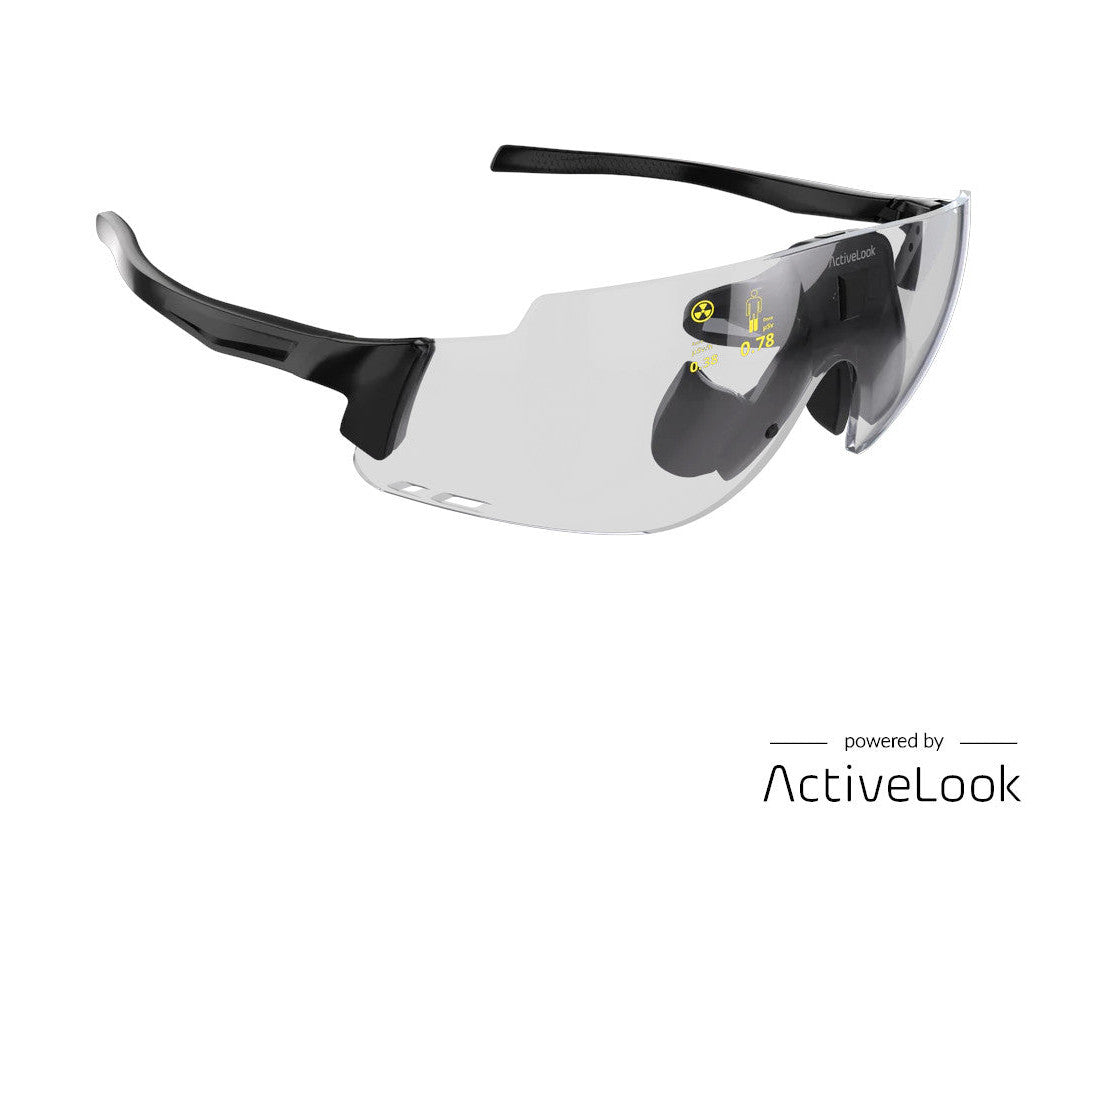 ActiveLook ENTERPRISE - Smart AR glasses for the industry.